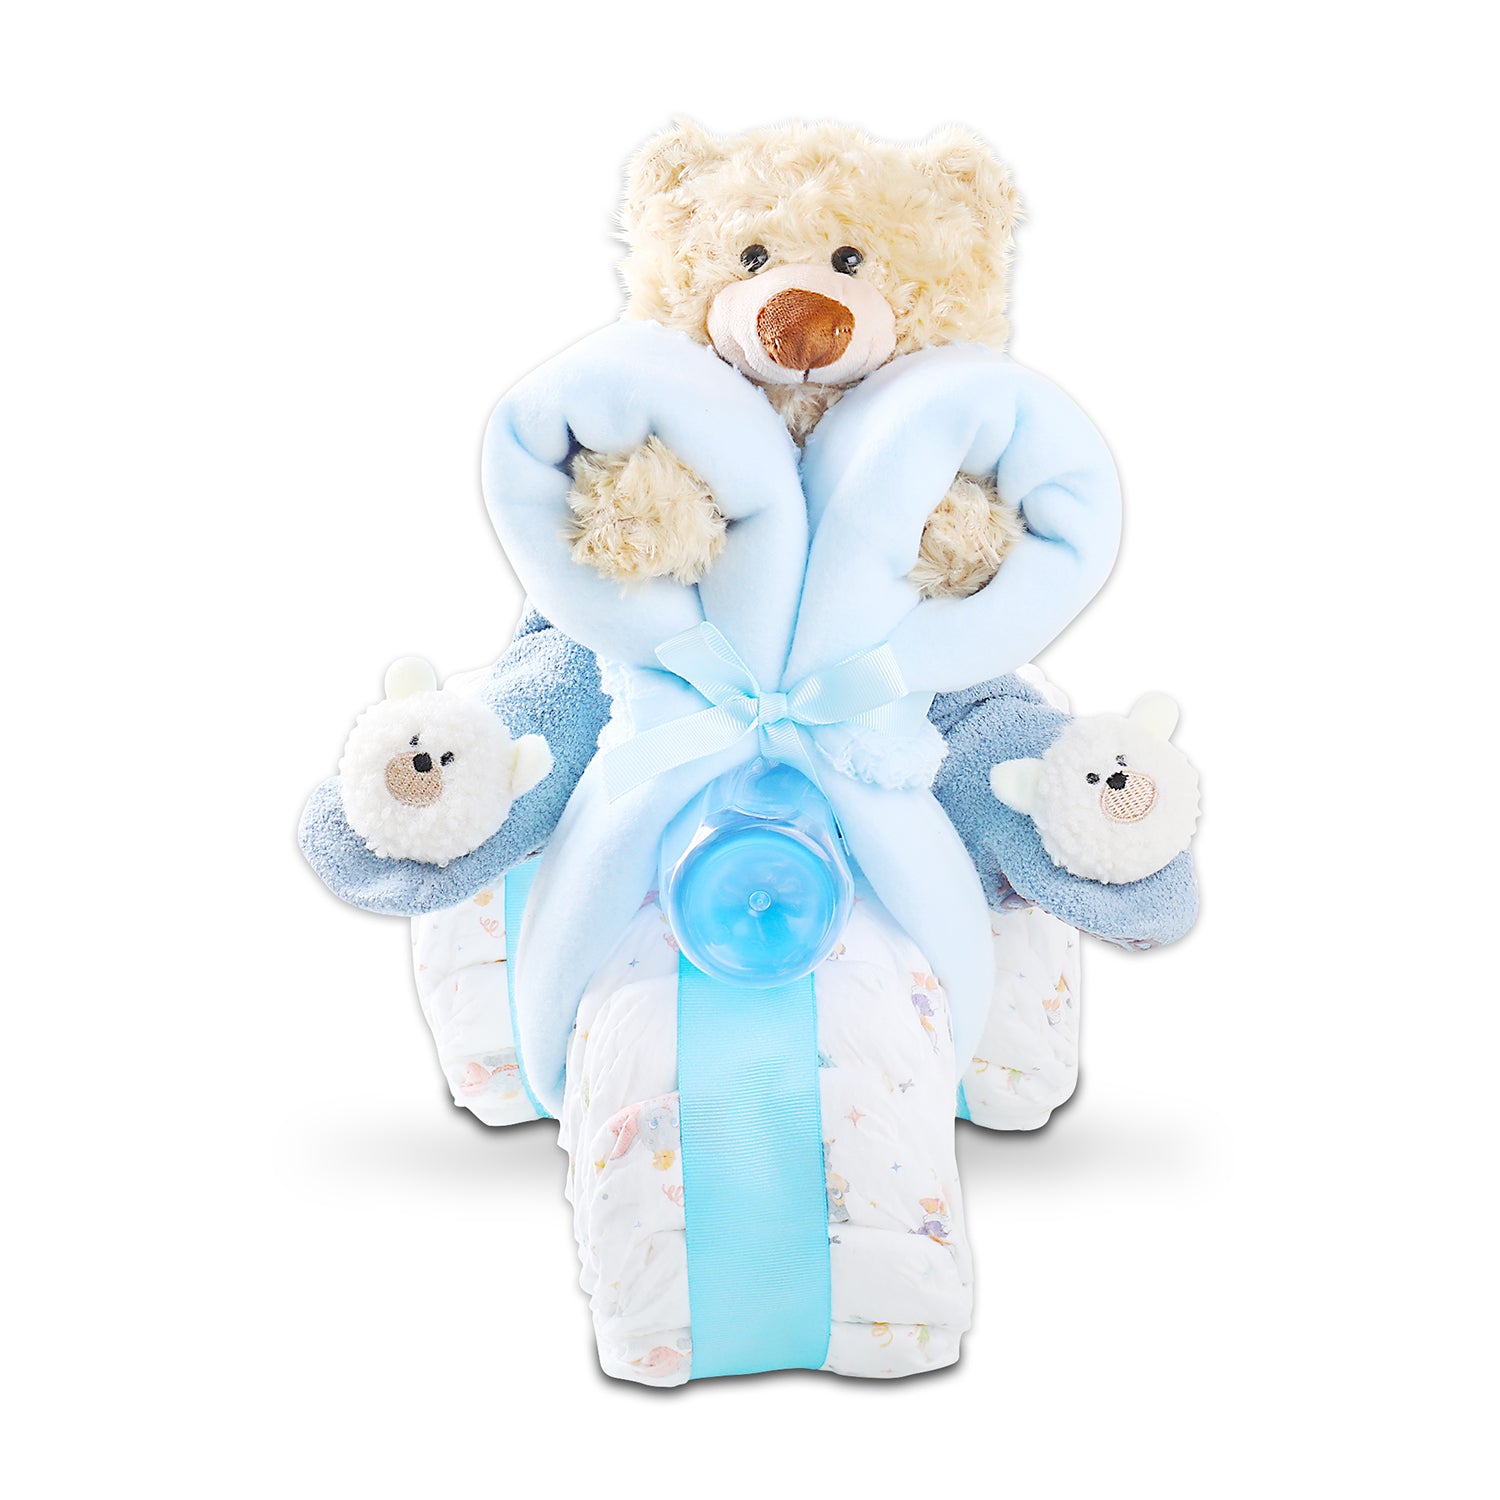 (39) Huggies Diapers #2, Baby Bib, Baby Blanket, Baby Bottle, Plush Teddy Bear W/ Sweater, Baby Booties